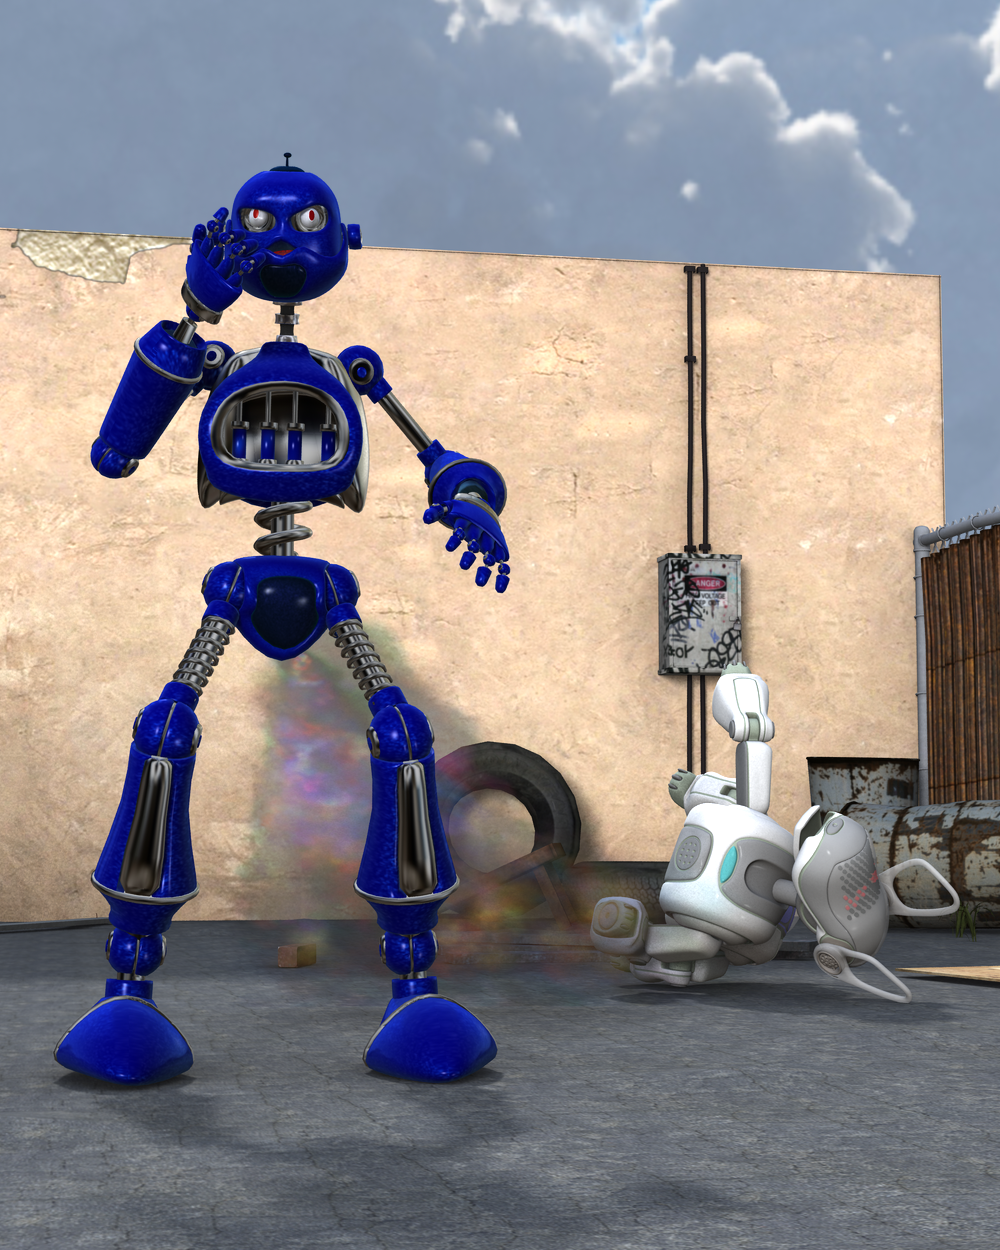 Giant Robots, no REALLY giant robots - Daz 3D Forums